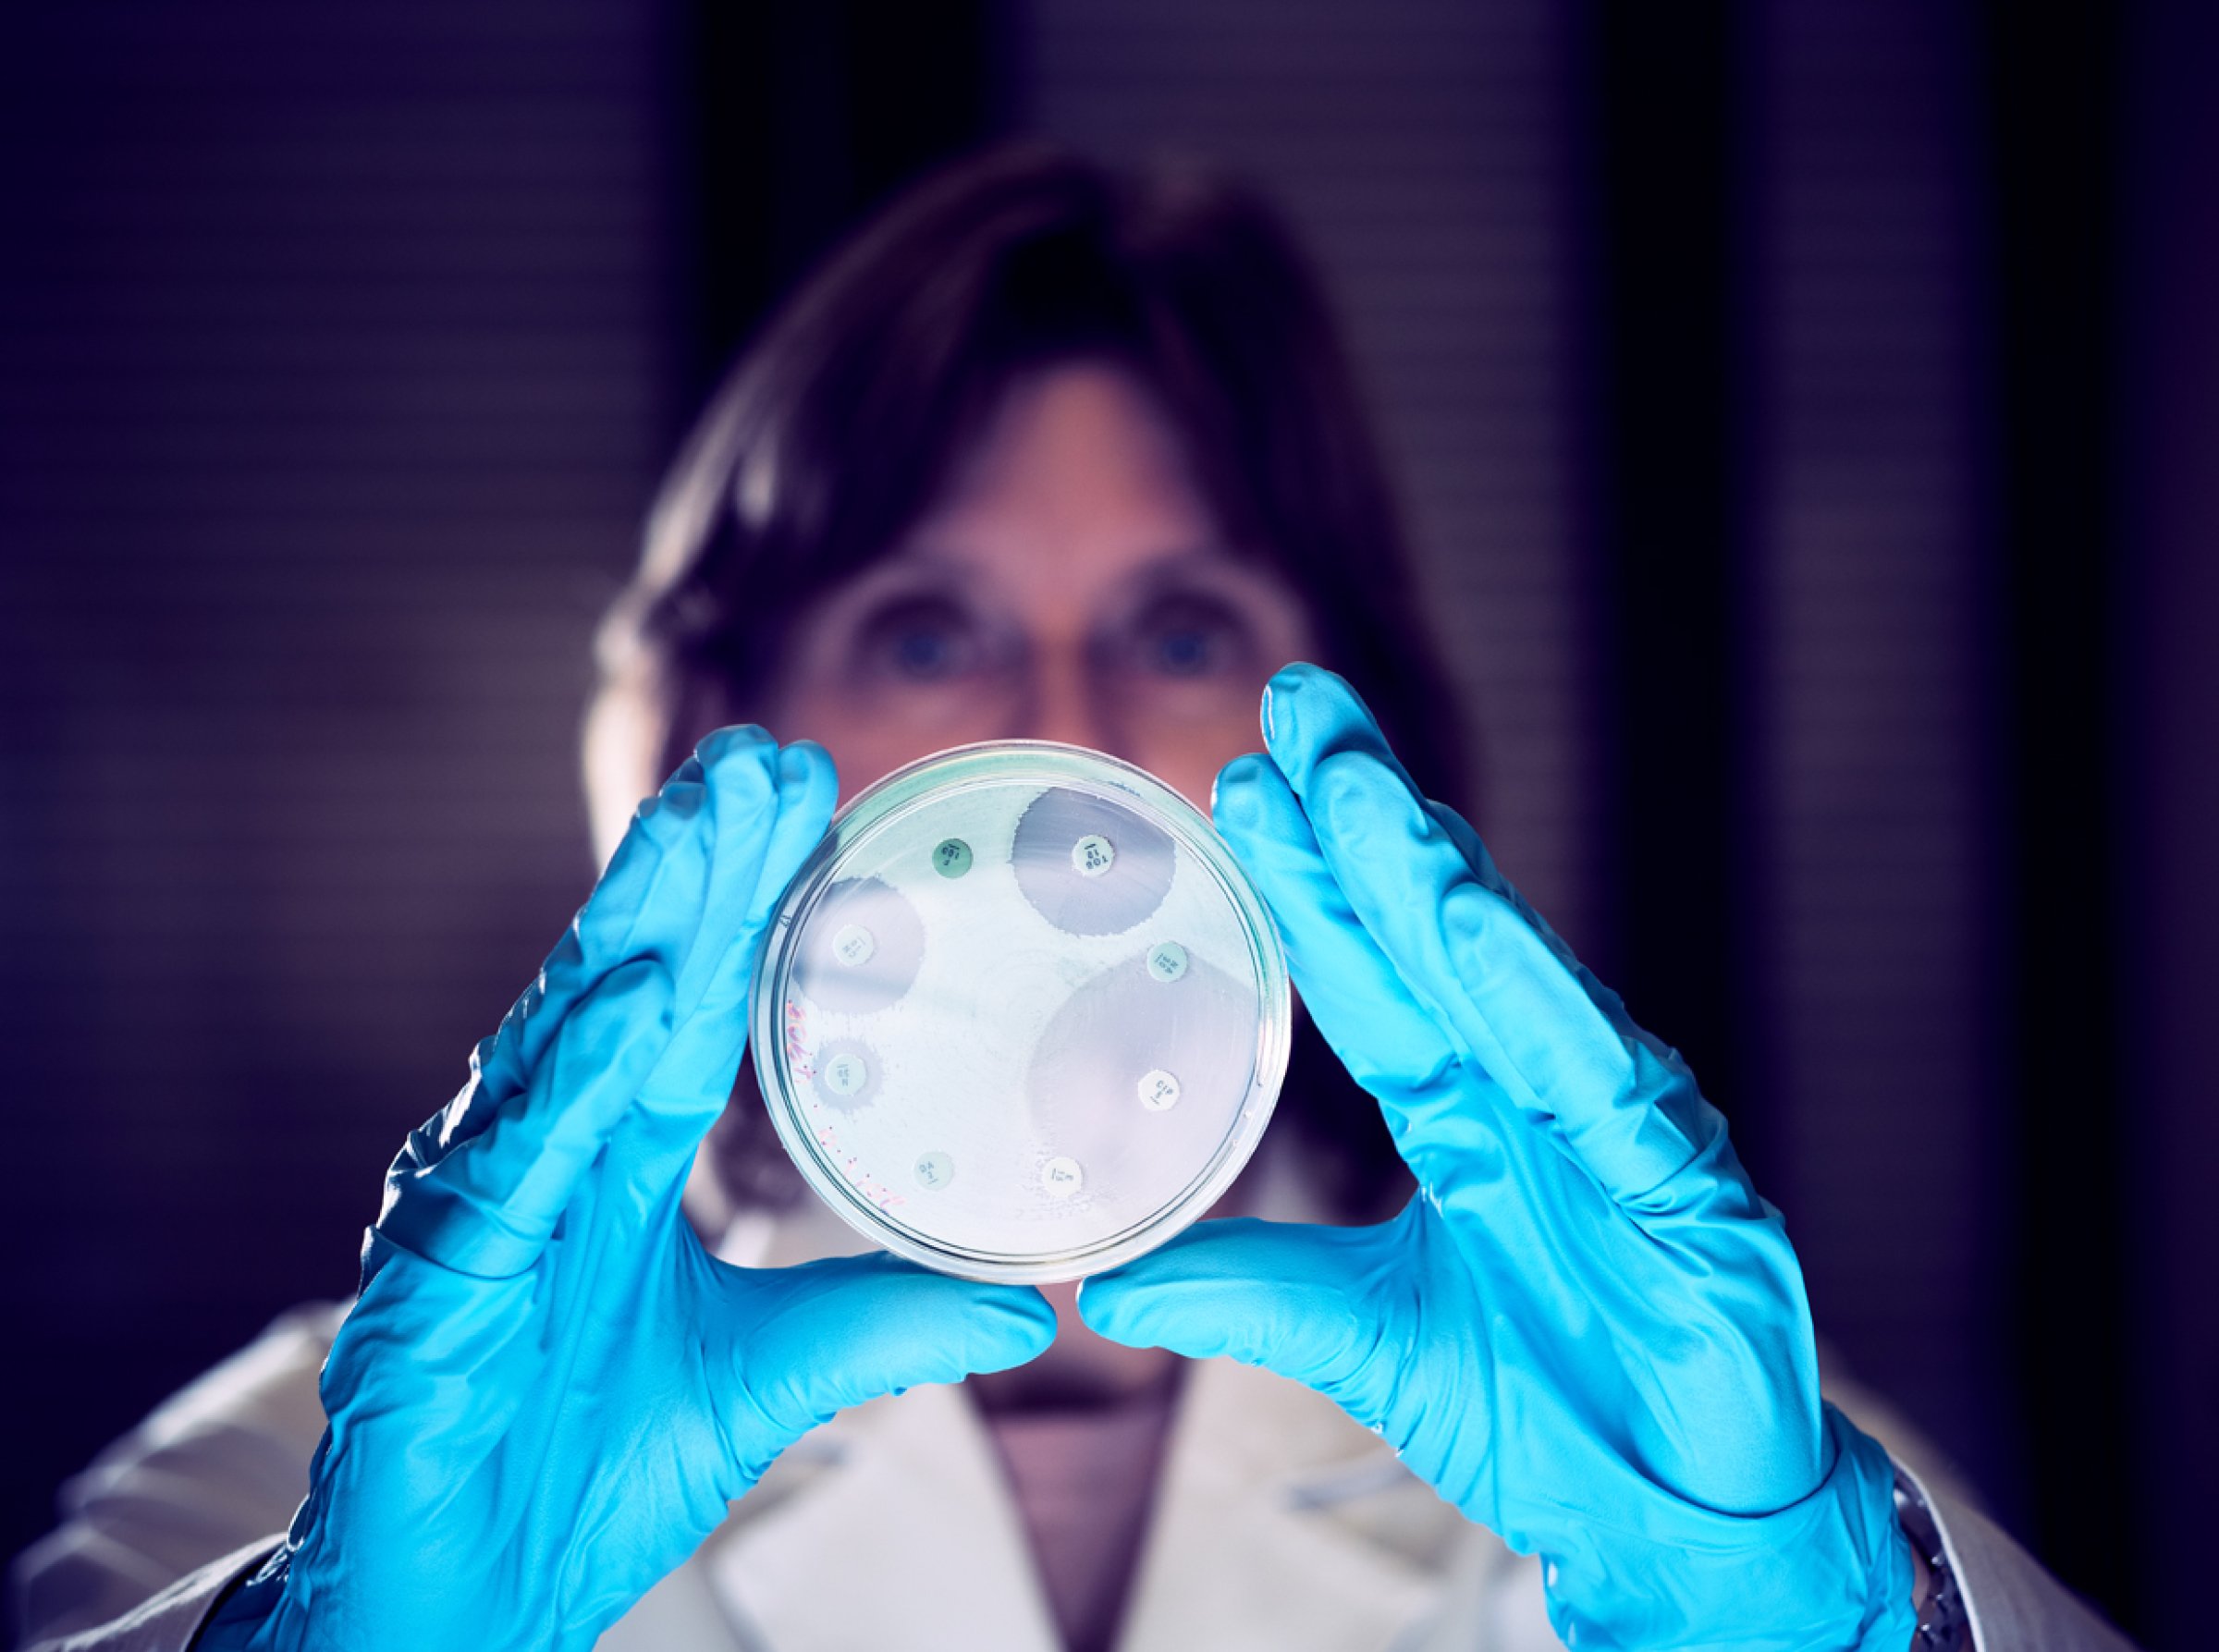 Seniorforsker Marianne Sunde ved Veterinærinstituttet viser petriskål med bakterier der en ser at noen er antibiotikaresistente. Foto: Eivind Røhne